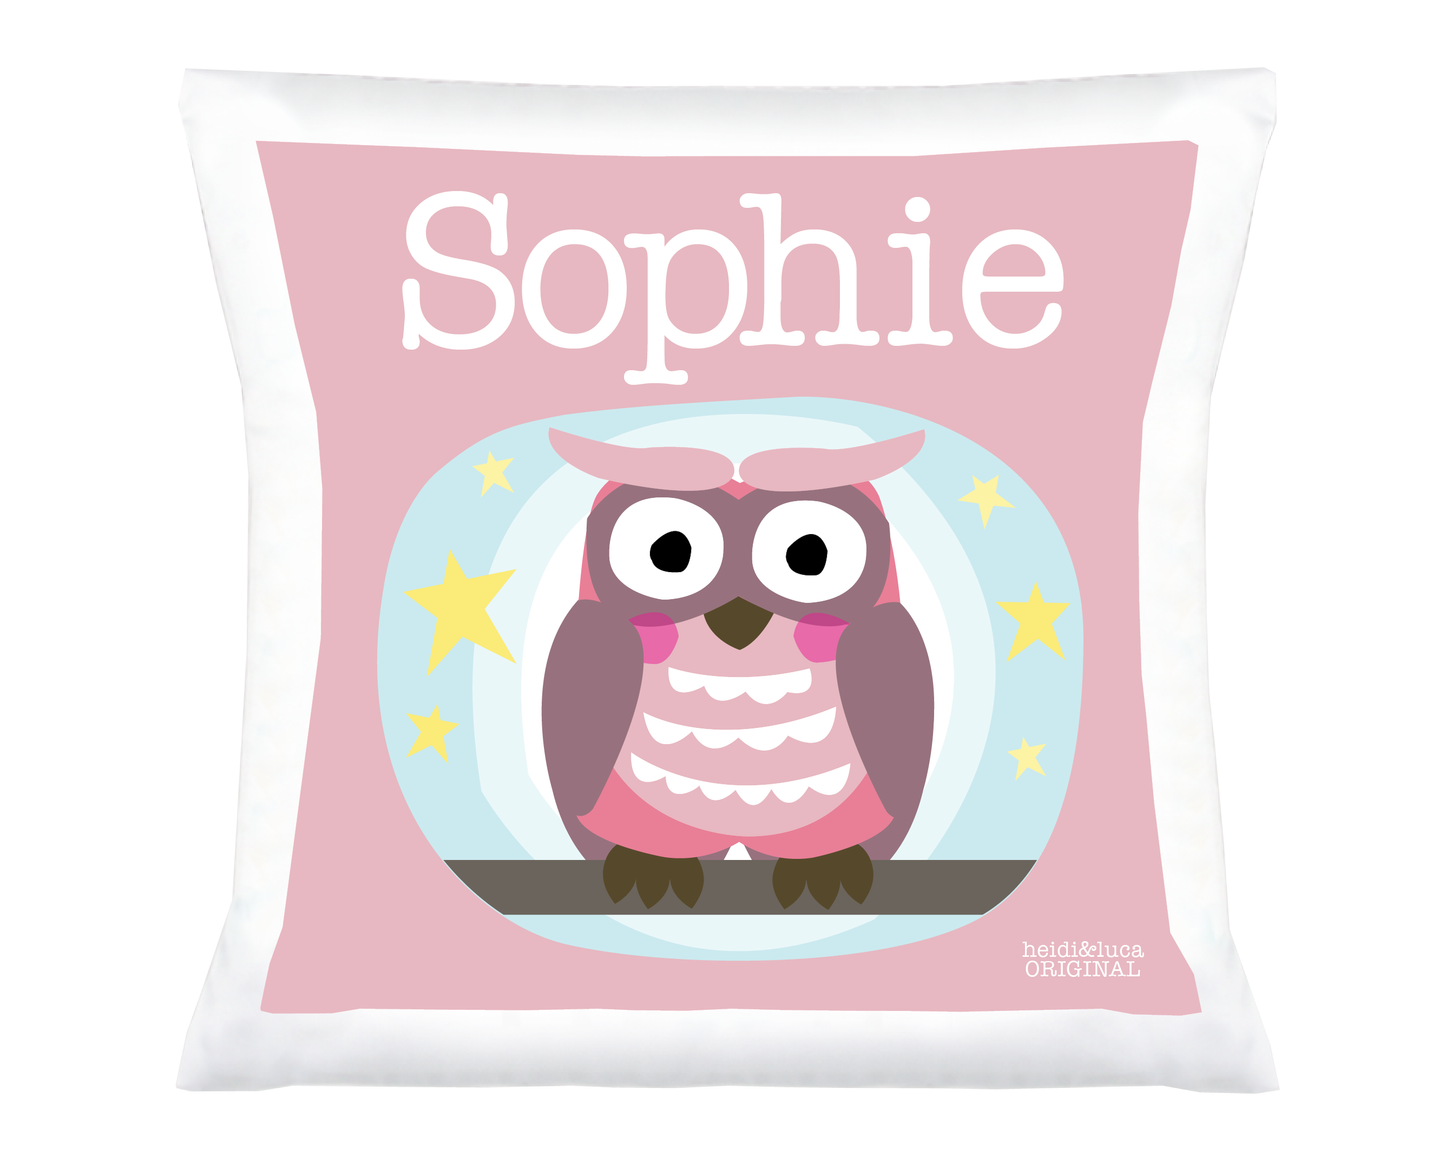 Cooky Owl Cushion Cover